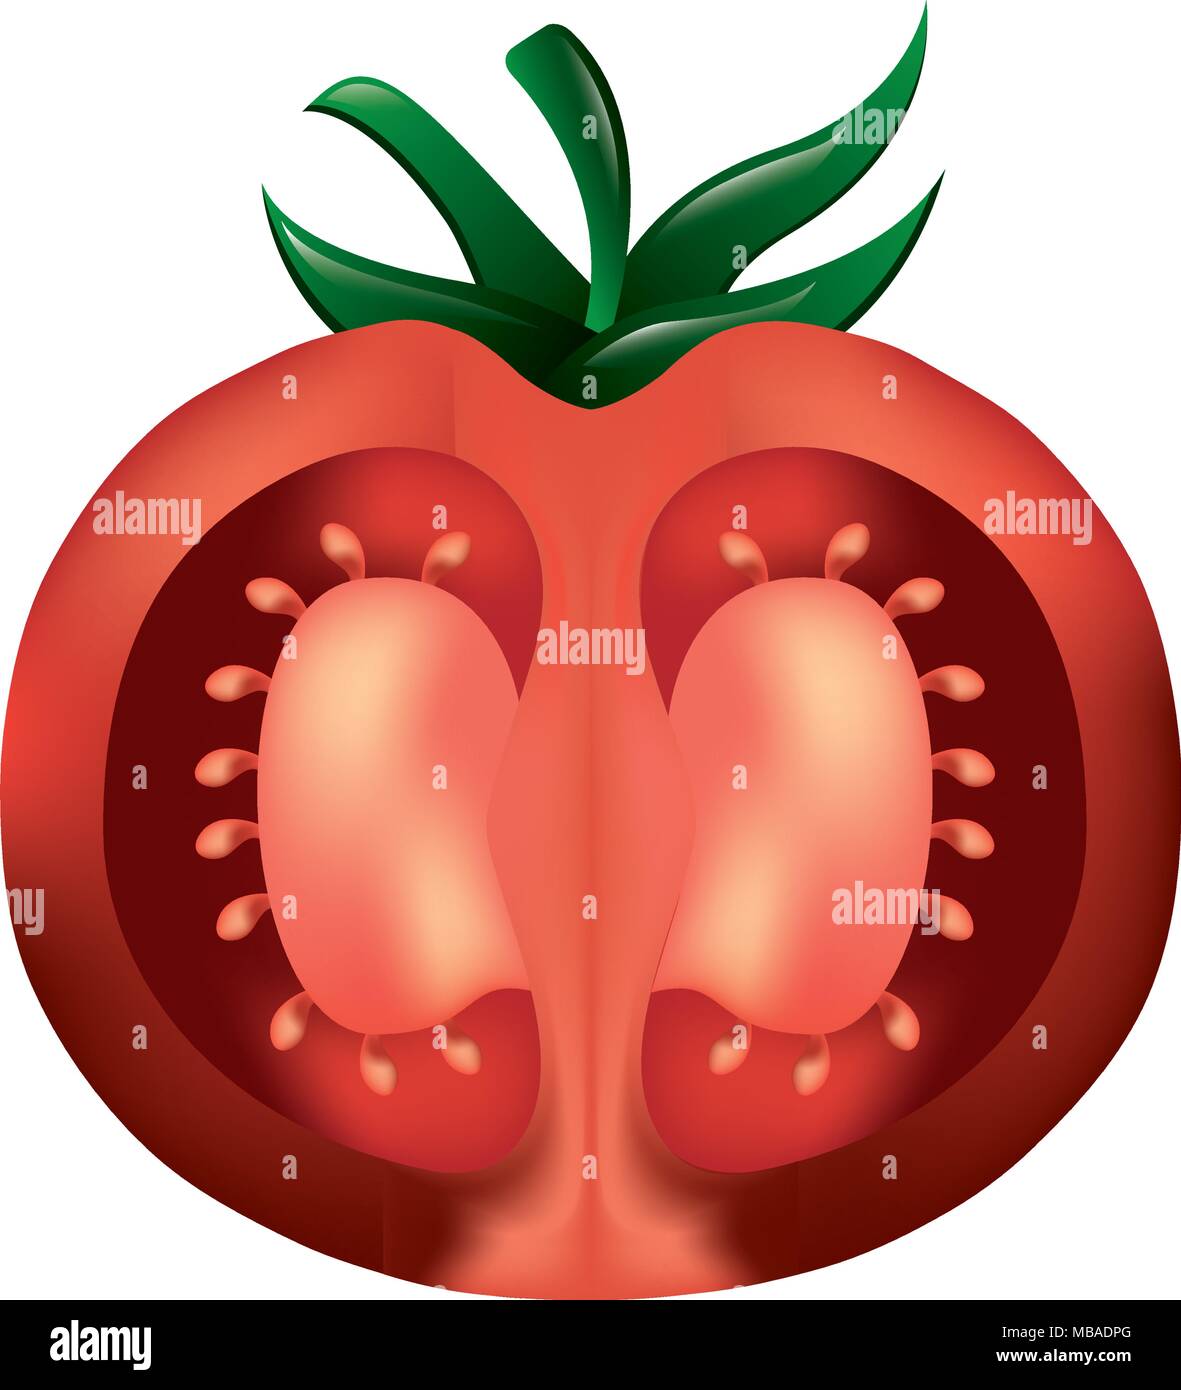 half tomato fresh healthy food Stock Vector